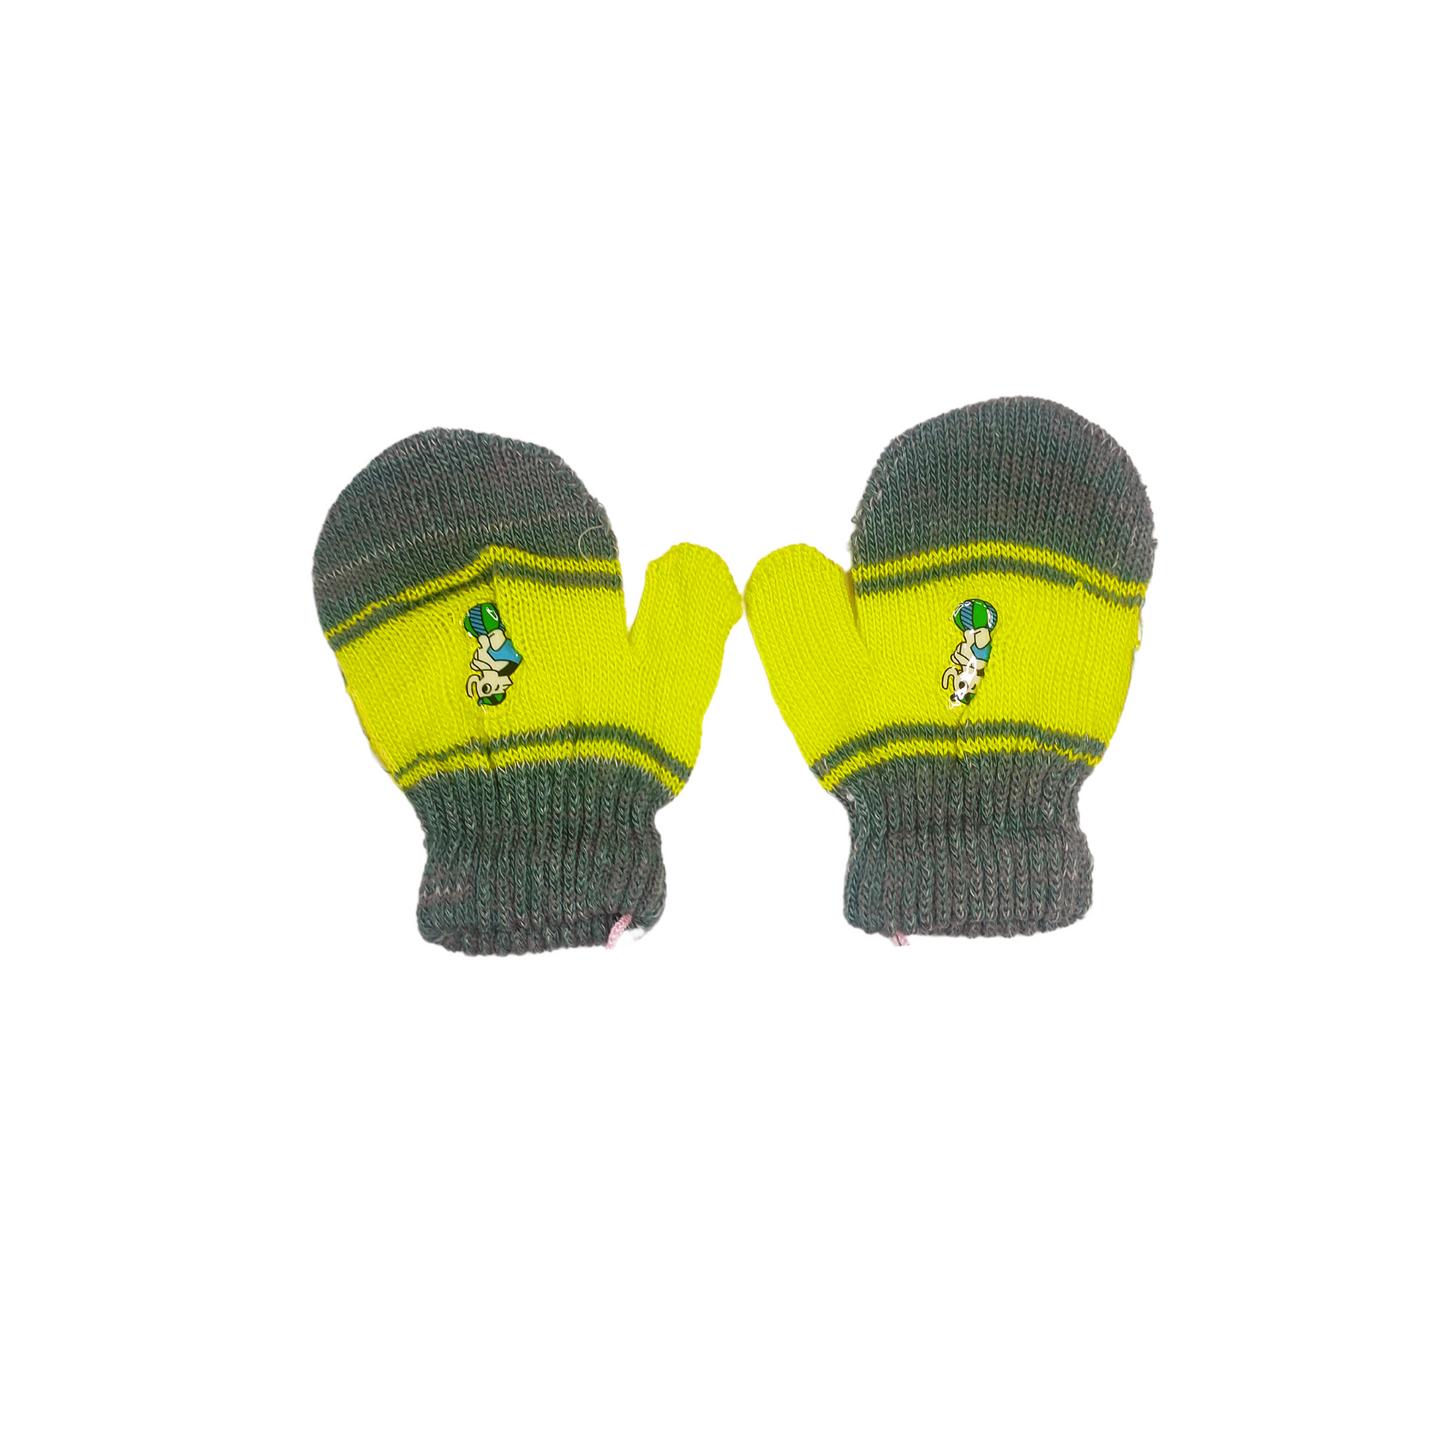 Newborn Baby Woolen Mittens - Snug Winter Comfort for Tiny Hands fluorescent green (Hand Glove)